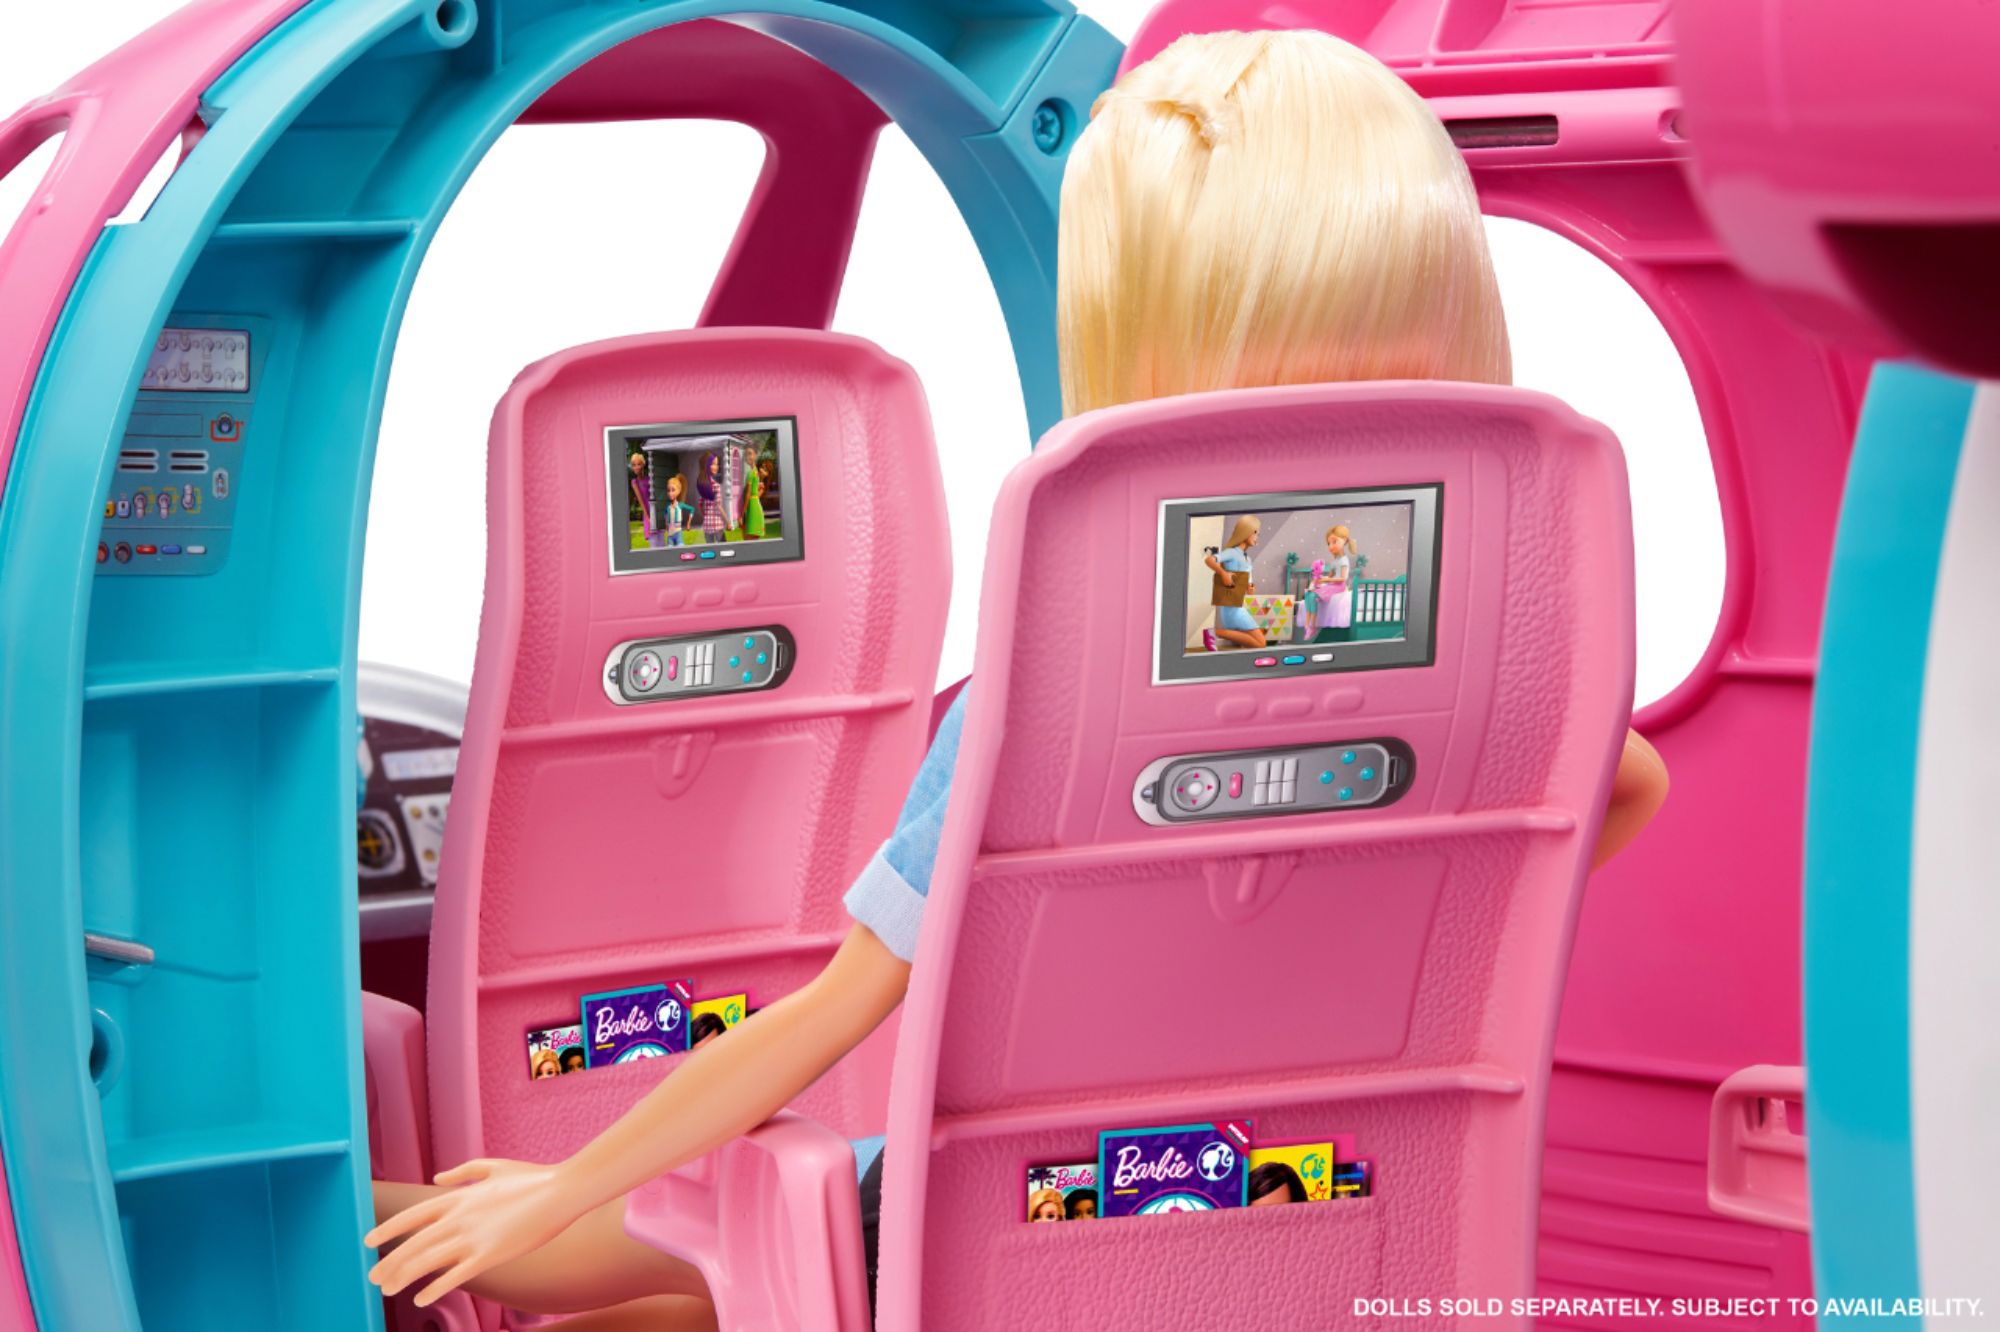 Barbie Dream Plane Airplane Jet 2019 Mattel Playset Pink White Toy Gift